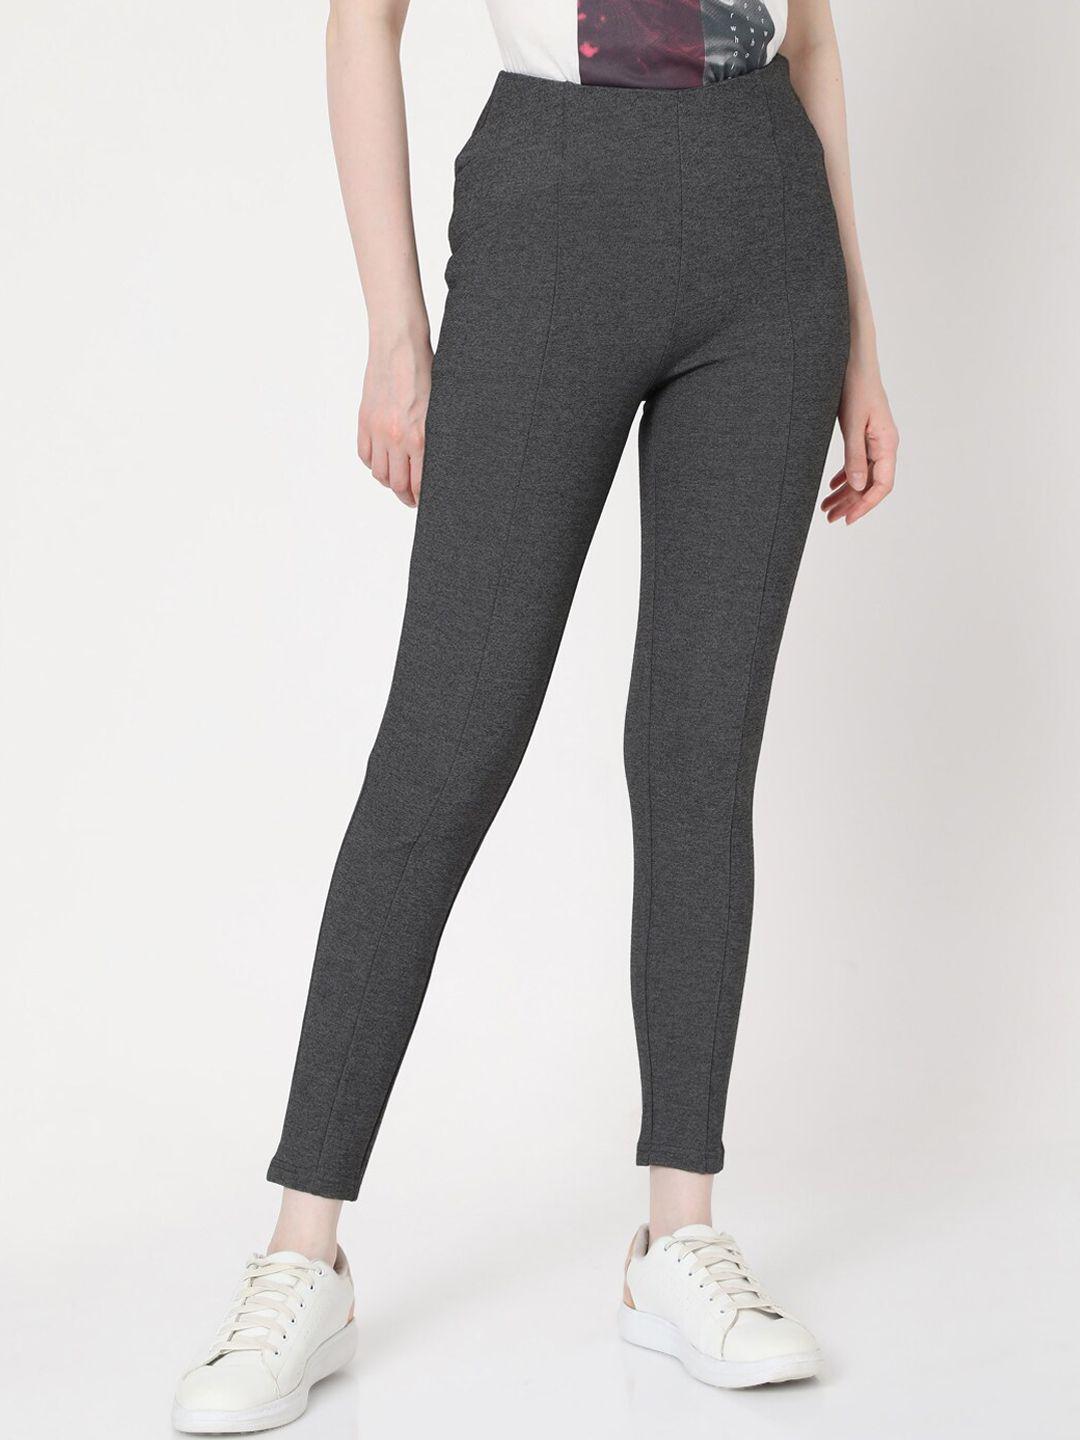 vero moda women grey solid leggings